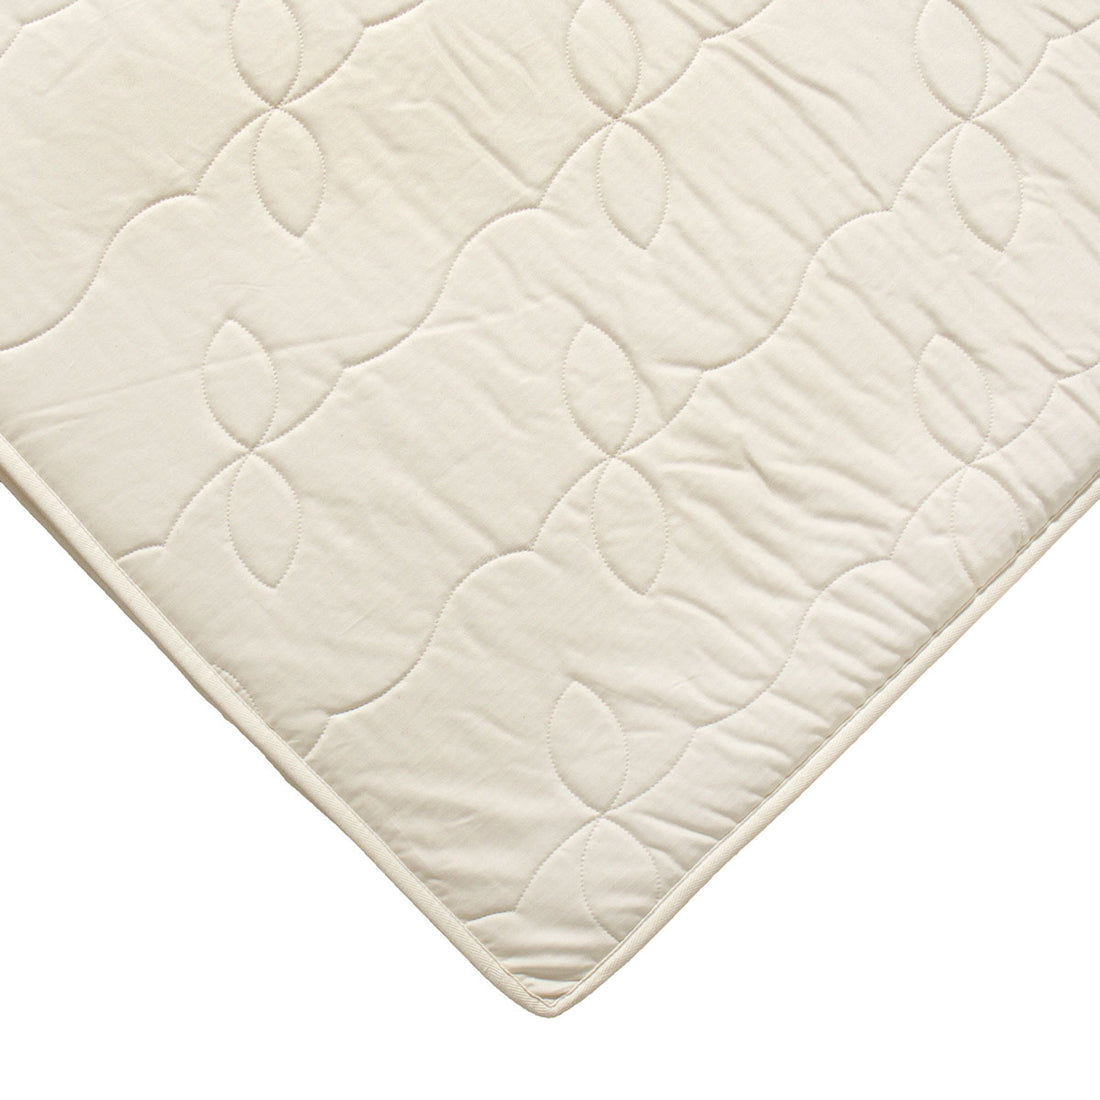 oliver-furniture-seaside-cold-foam-mattress-for-beds-90x200x13cm- (2)